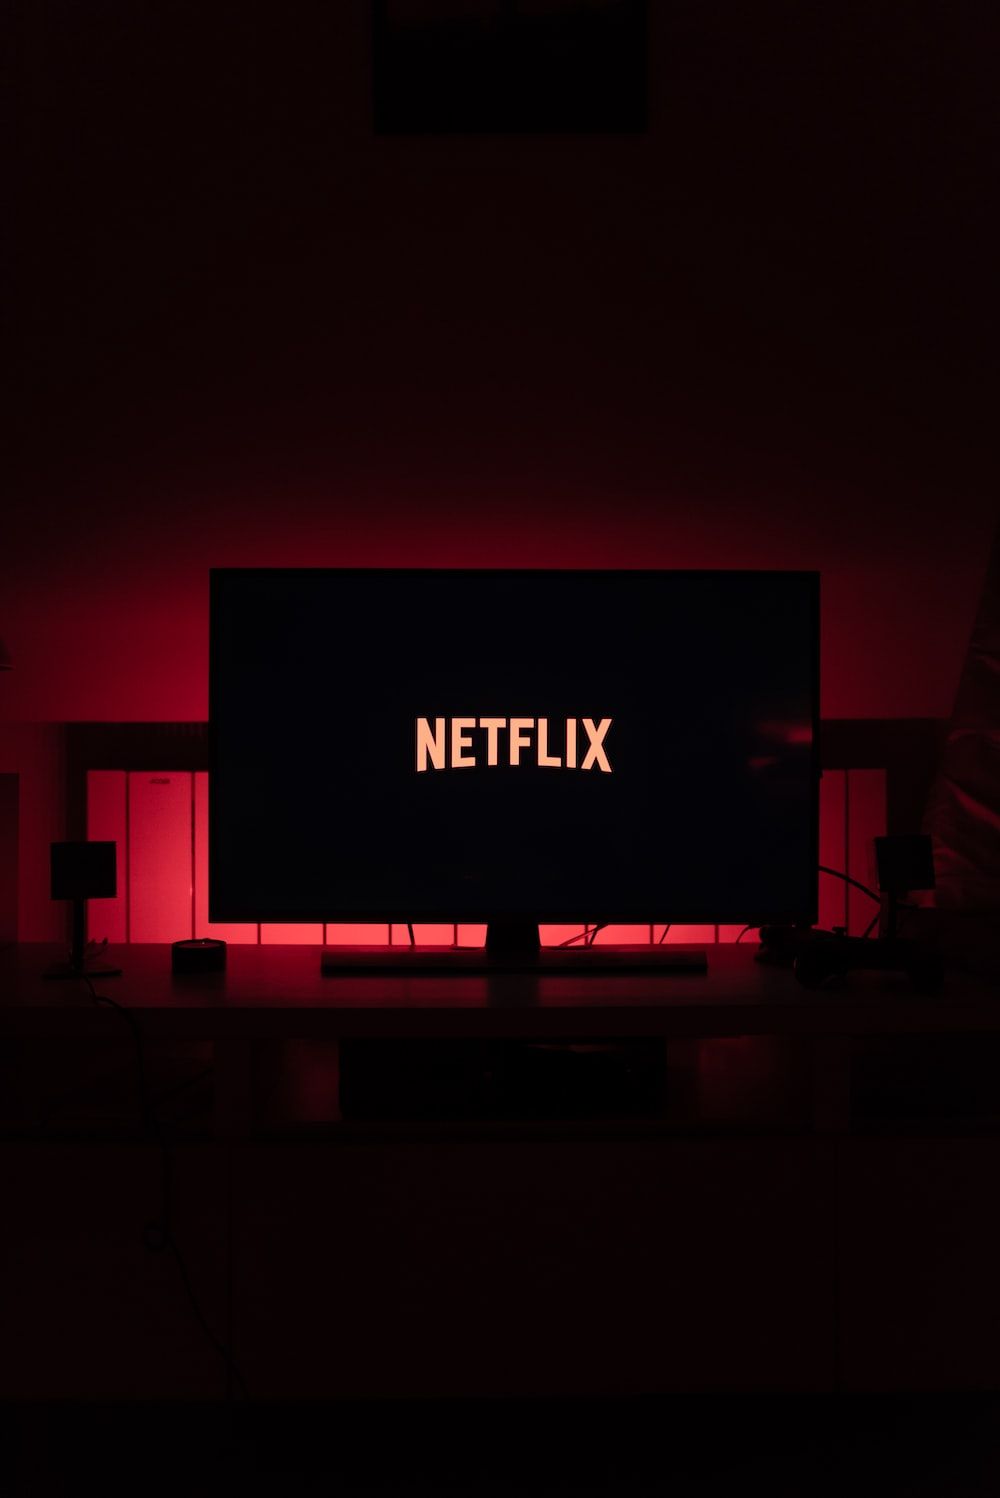 A tv screen with the netflix logo on it - Netflix